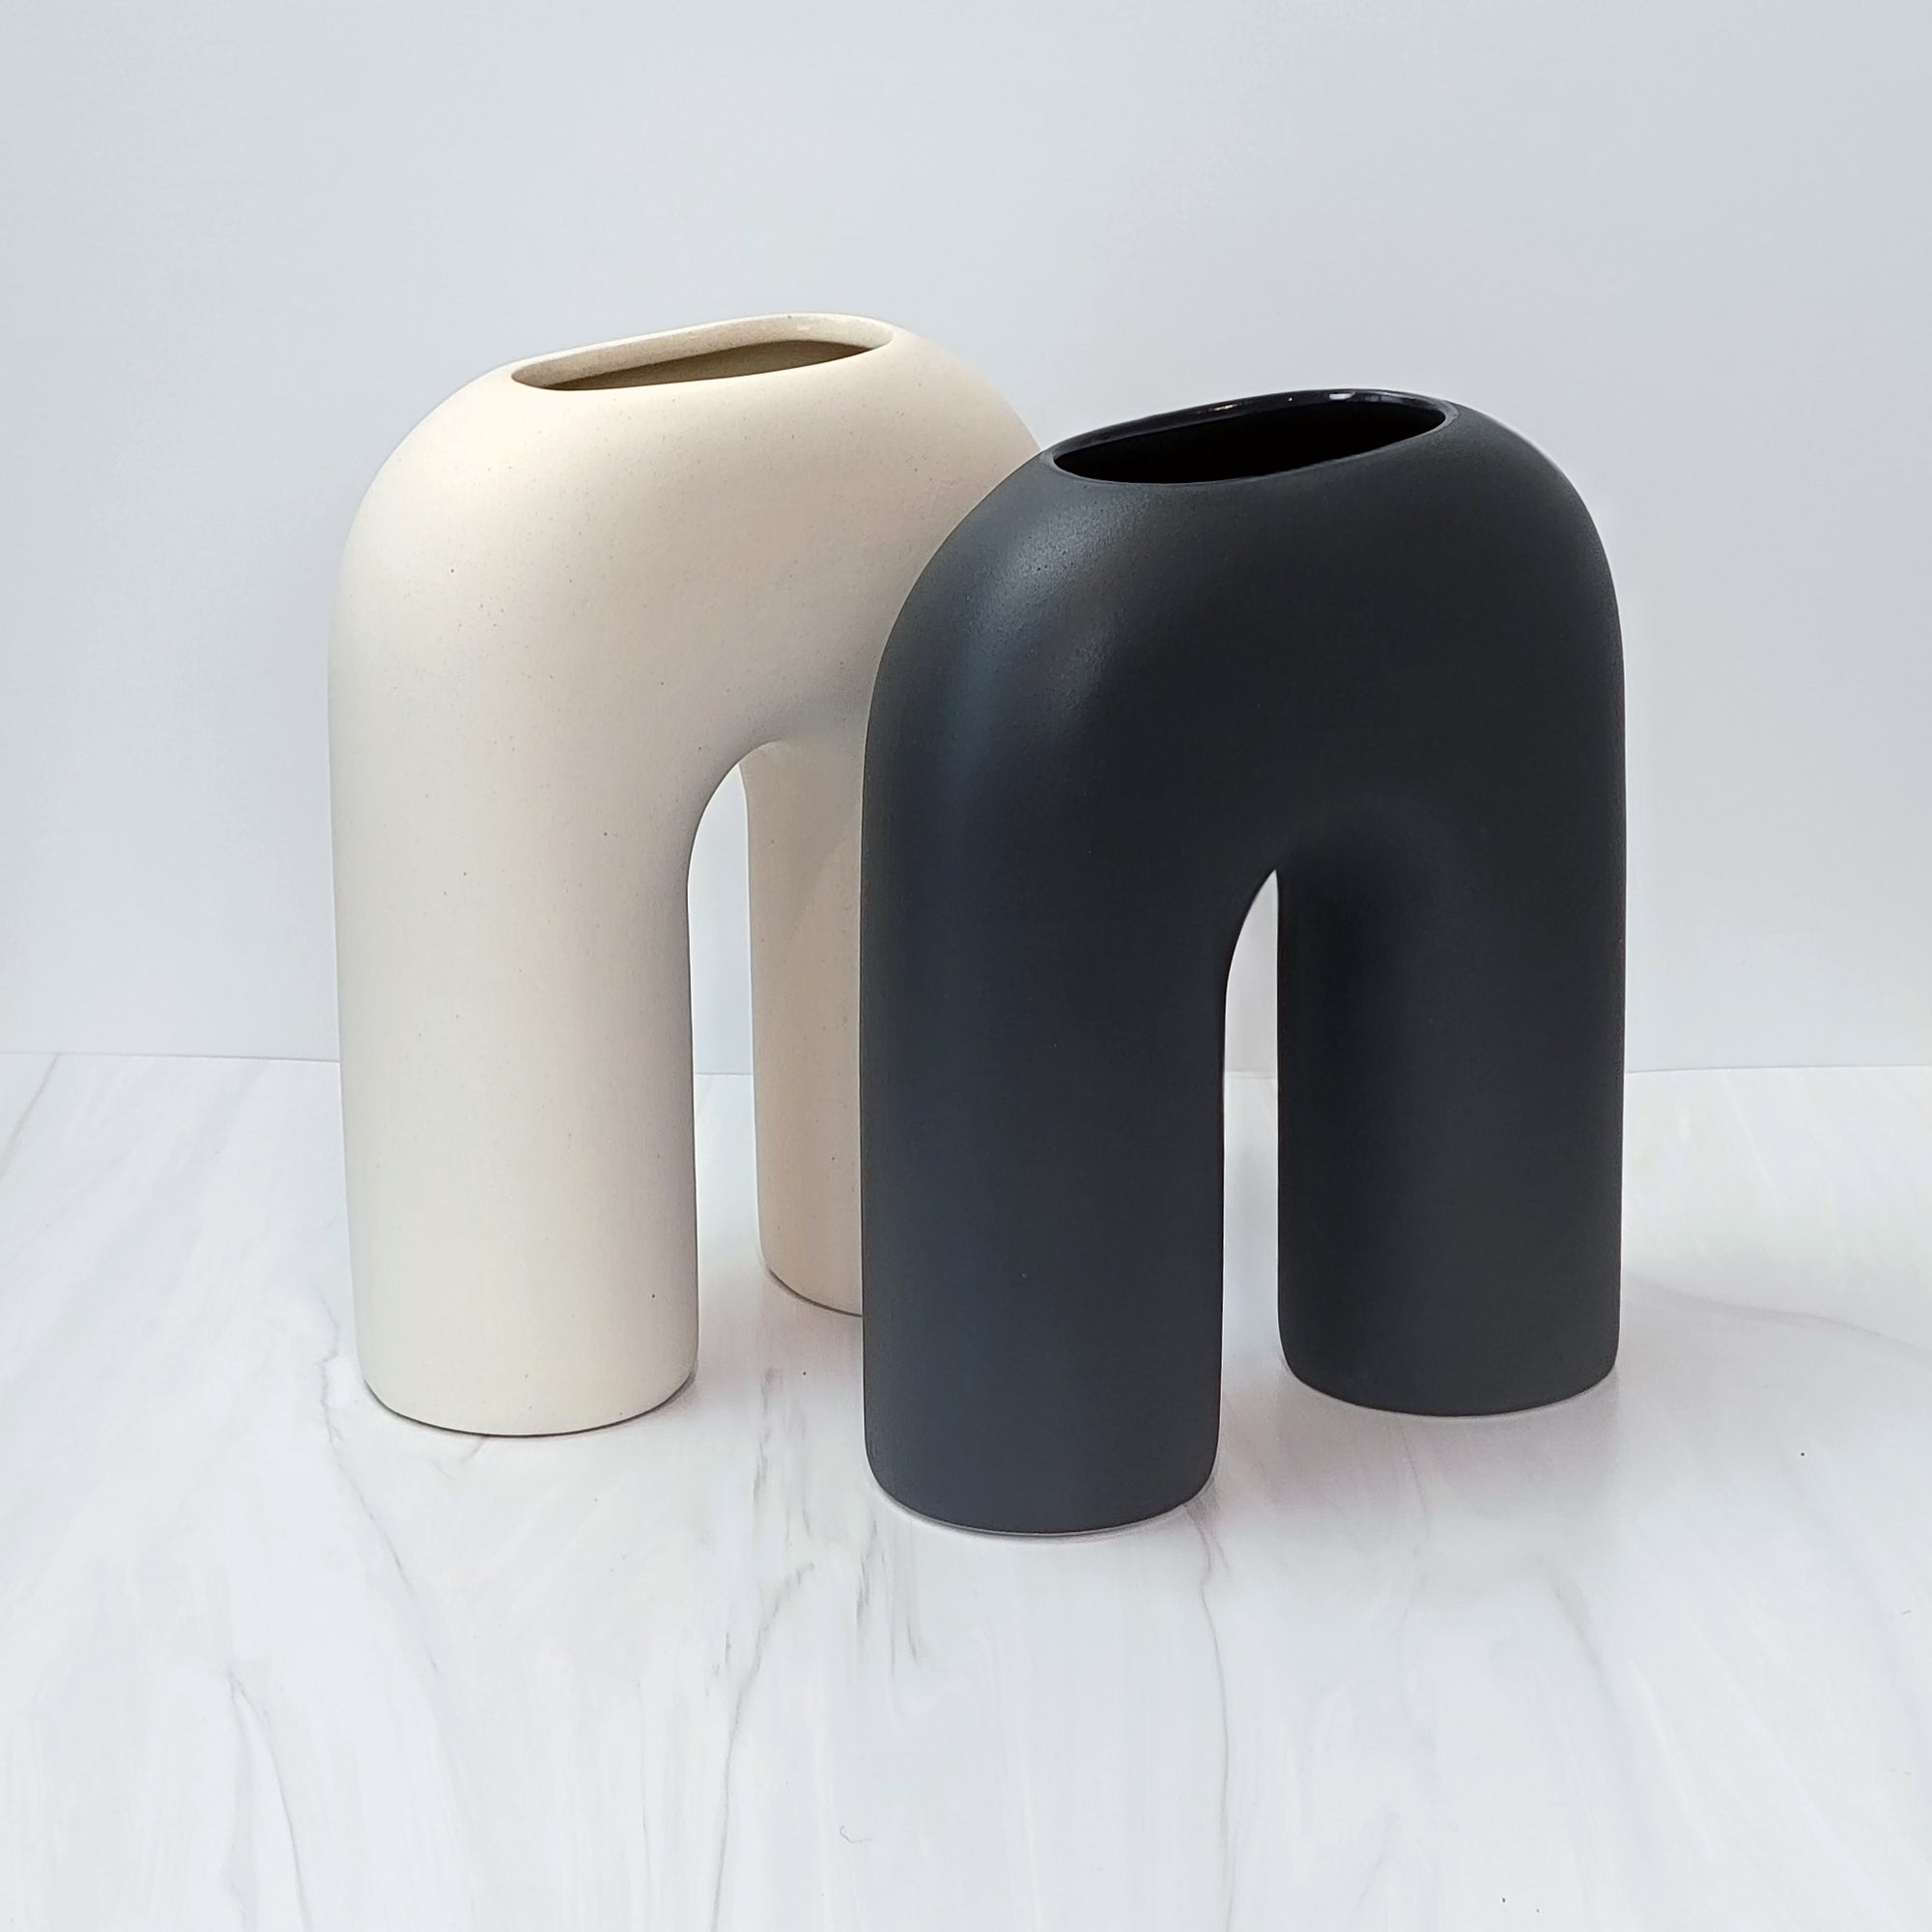 Black and white U shaped Zo vases.